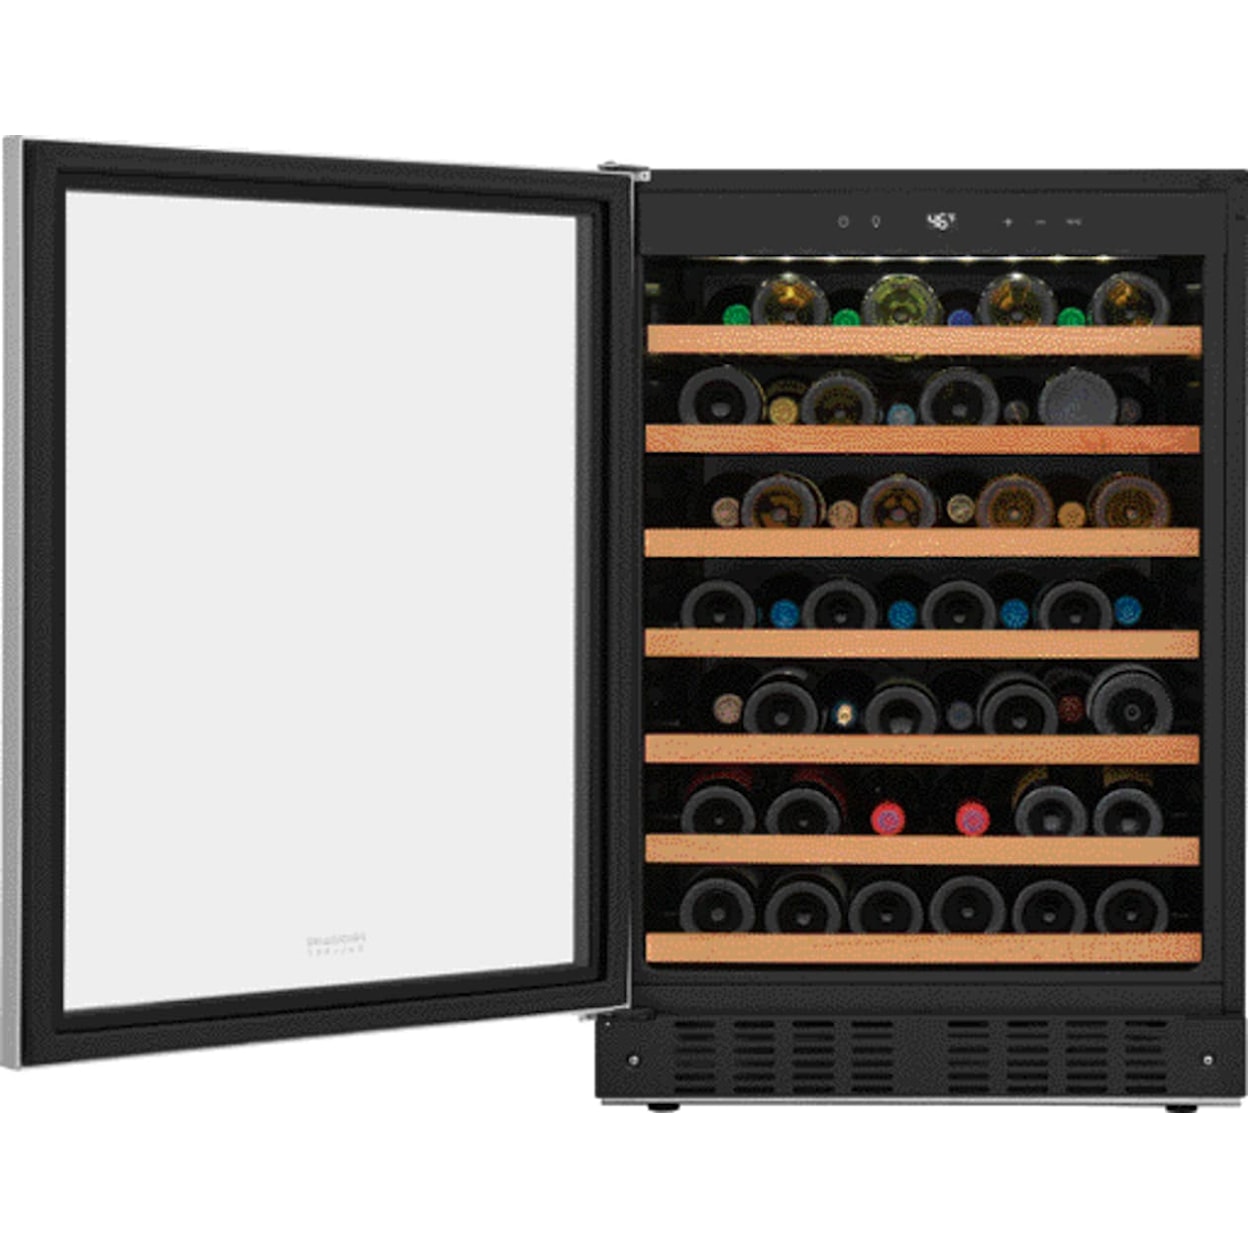 Frigidaire Refrigerators Refrigerator - Wine Cooler